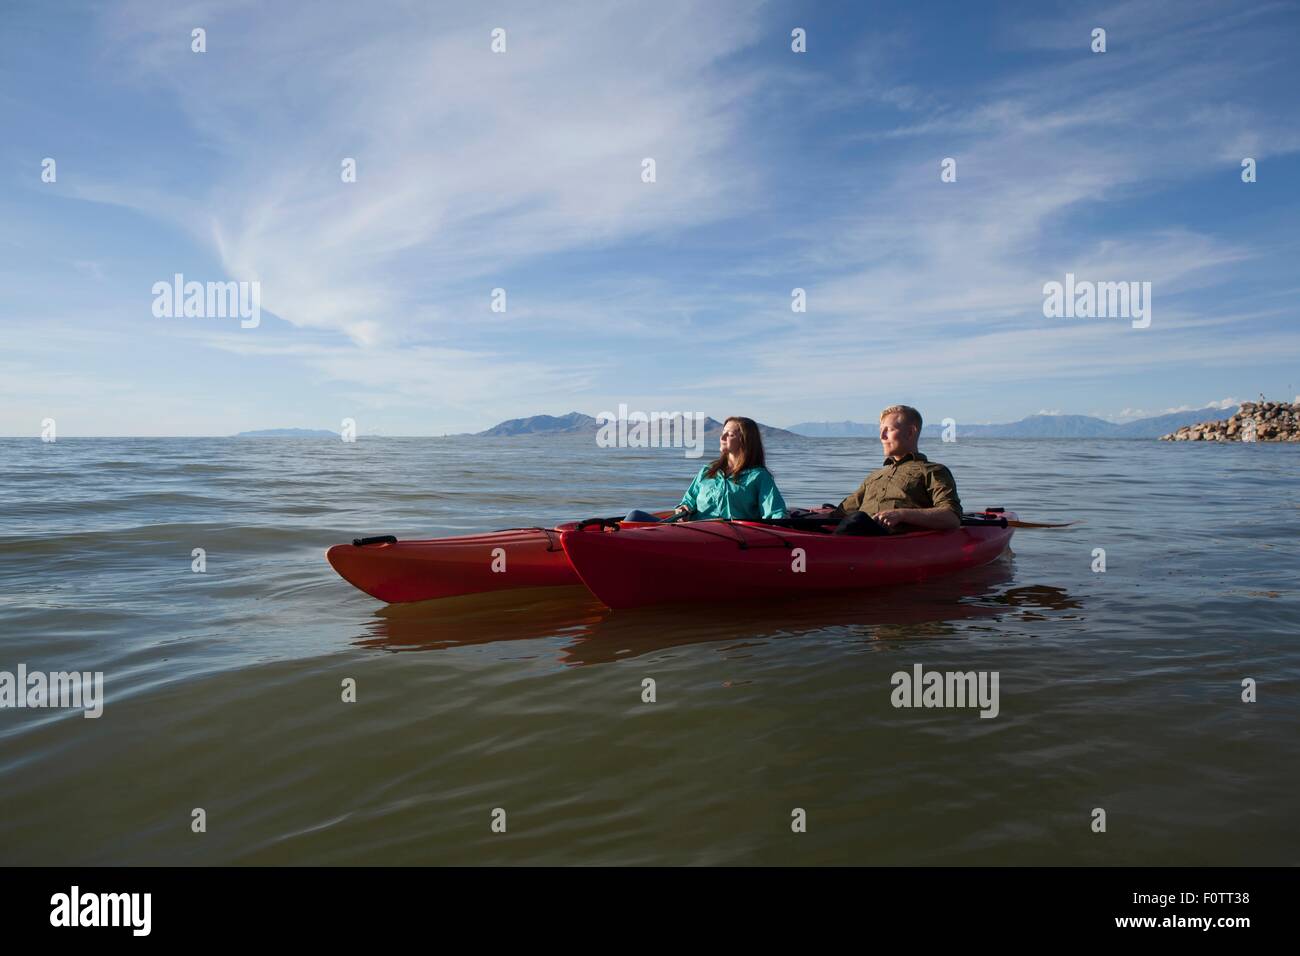 Junges Paar in Kajaks auf dem Wasser, Augen geschlossen, wegsehen, Great Salt Lake City, Utah, USA Stockfoto